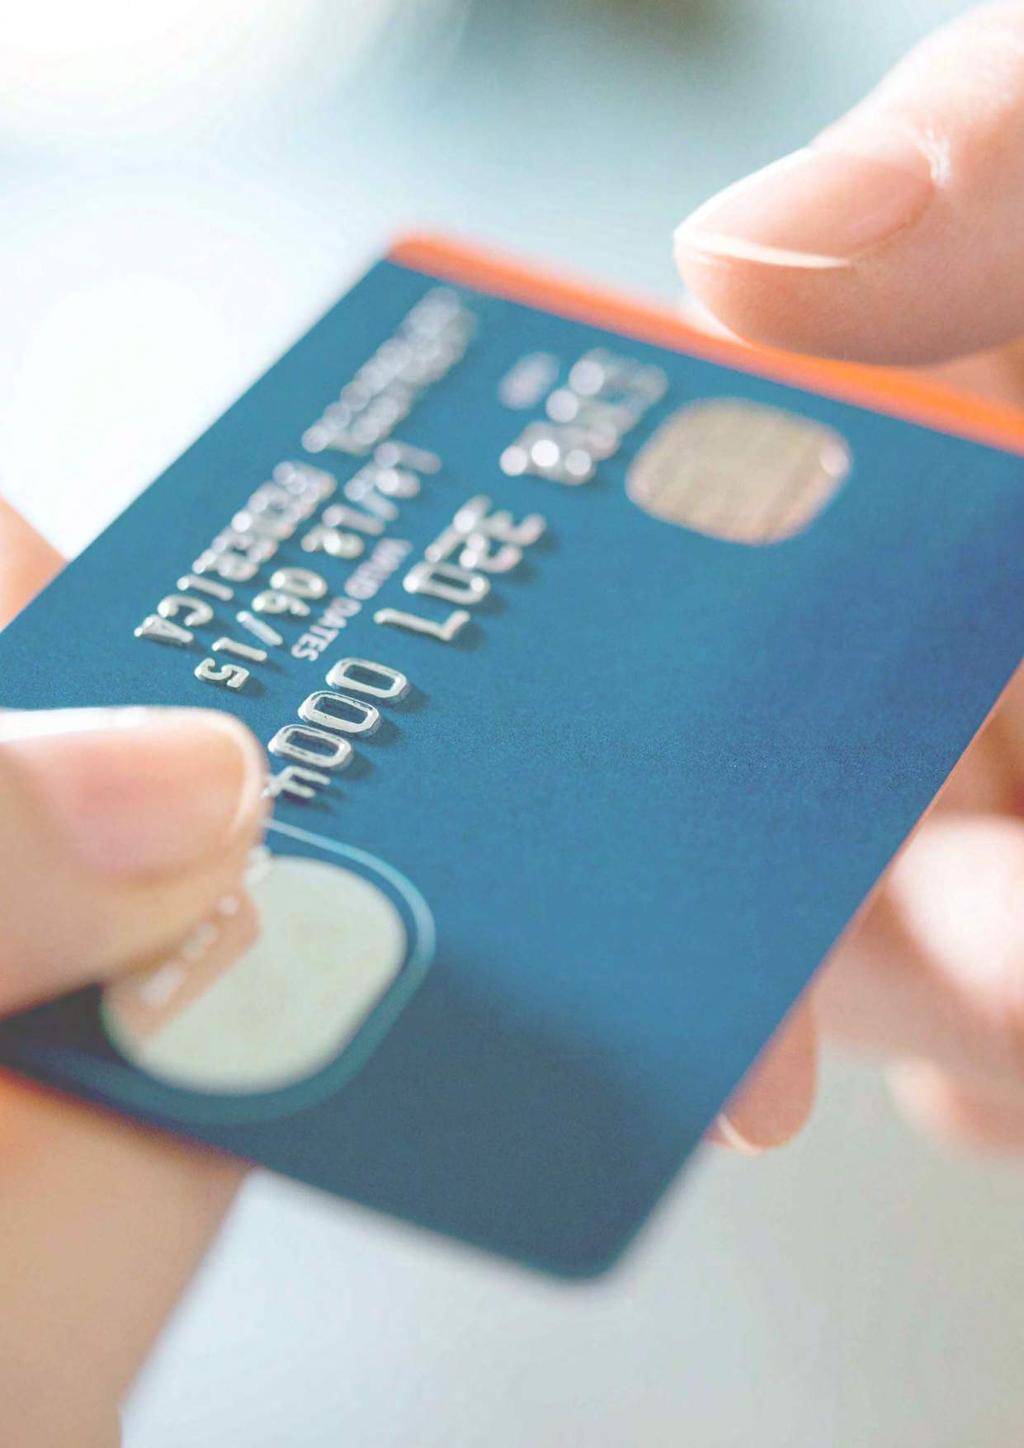 Card Management CardWorld Acquirer CardWorld Issuer CardWorld Producer CardWorld FraudTrap BankWorld Pre-Paid Cards Card On/Off Omnichannel Banking BankWorld Integrated Self-Service Platform